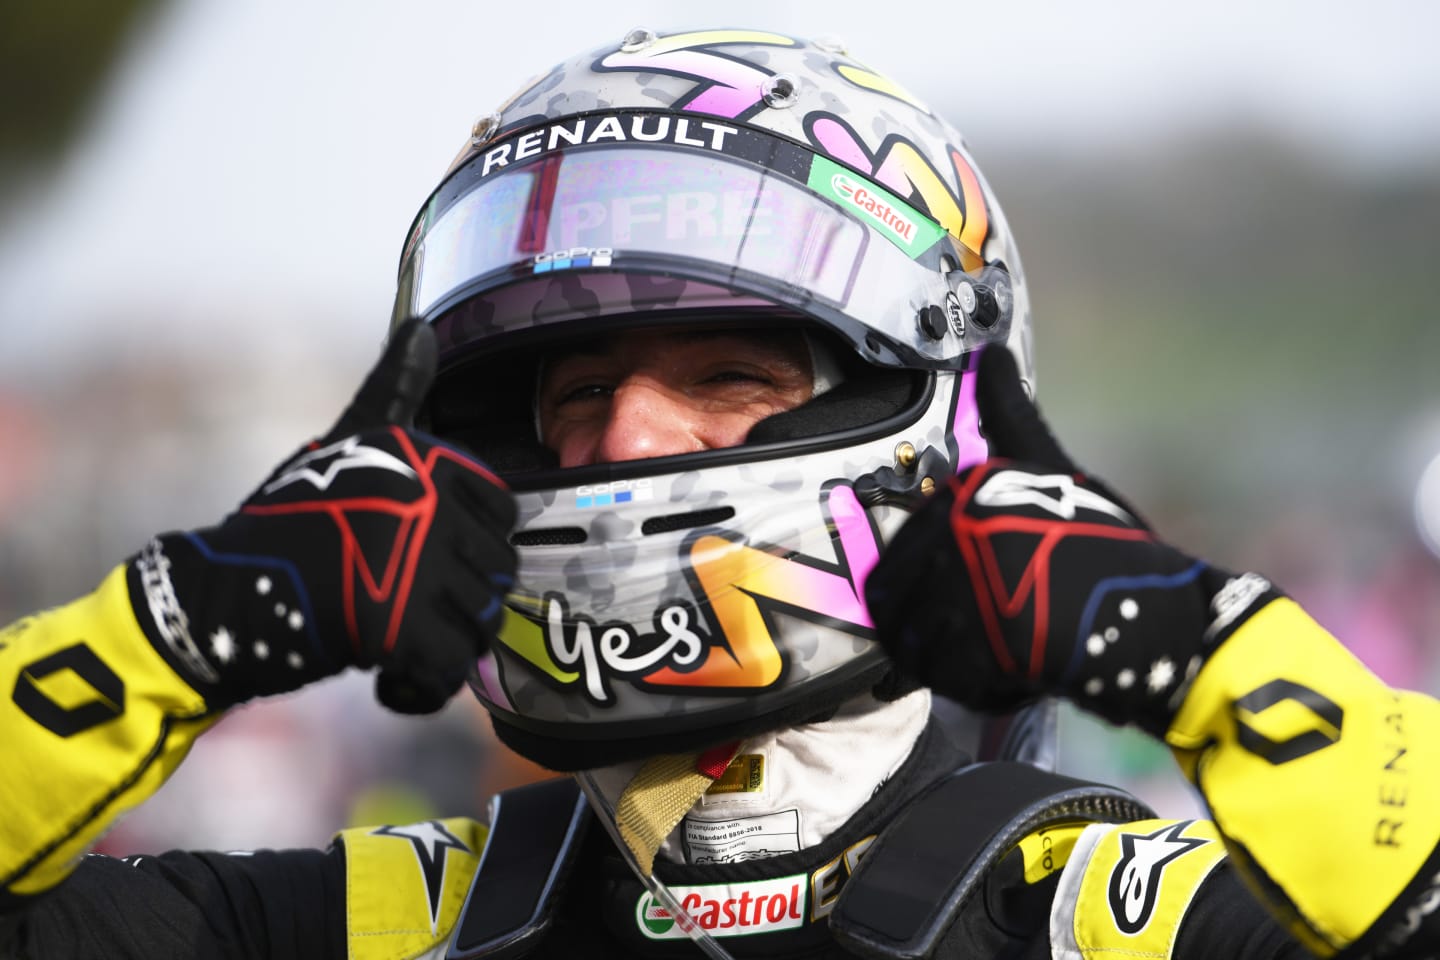 IMOLA, ITALY - NOVEMBER 01: Third placed Daniel Ricciardo of Australia and Renault Sport F1